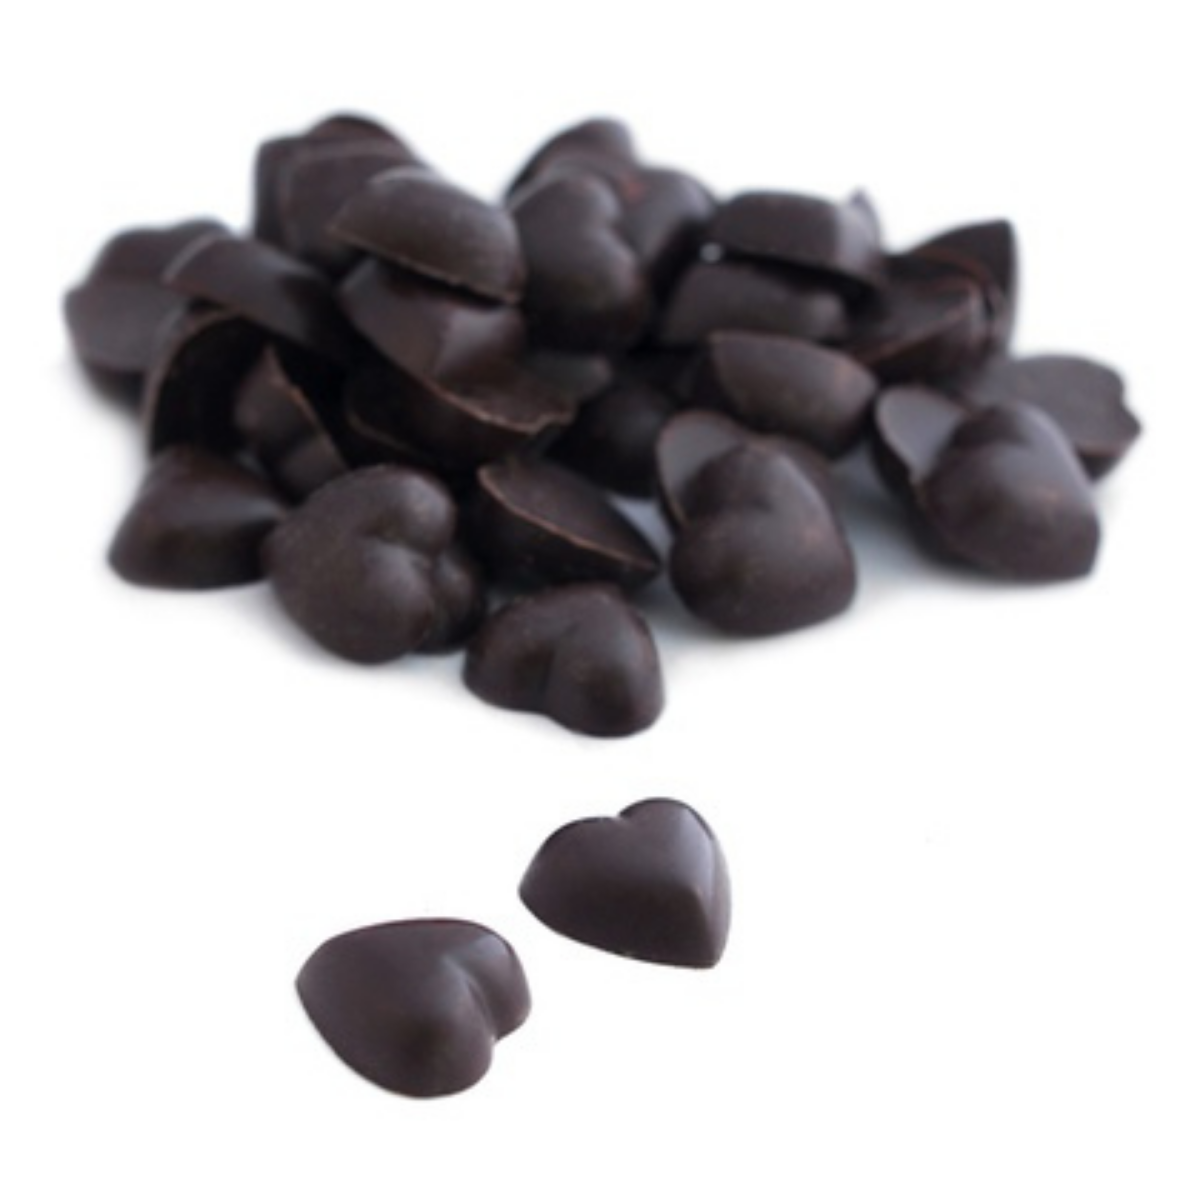 Delta-8 Chocolate Hearts - 300mg